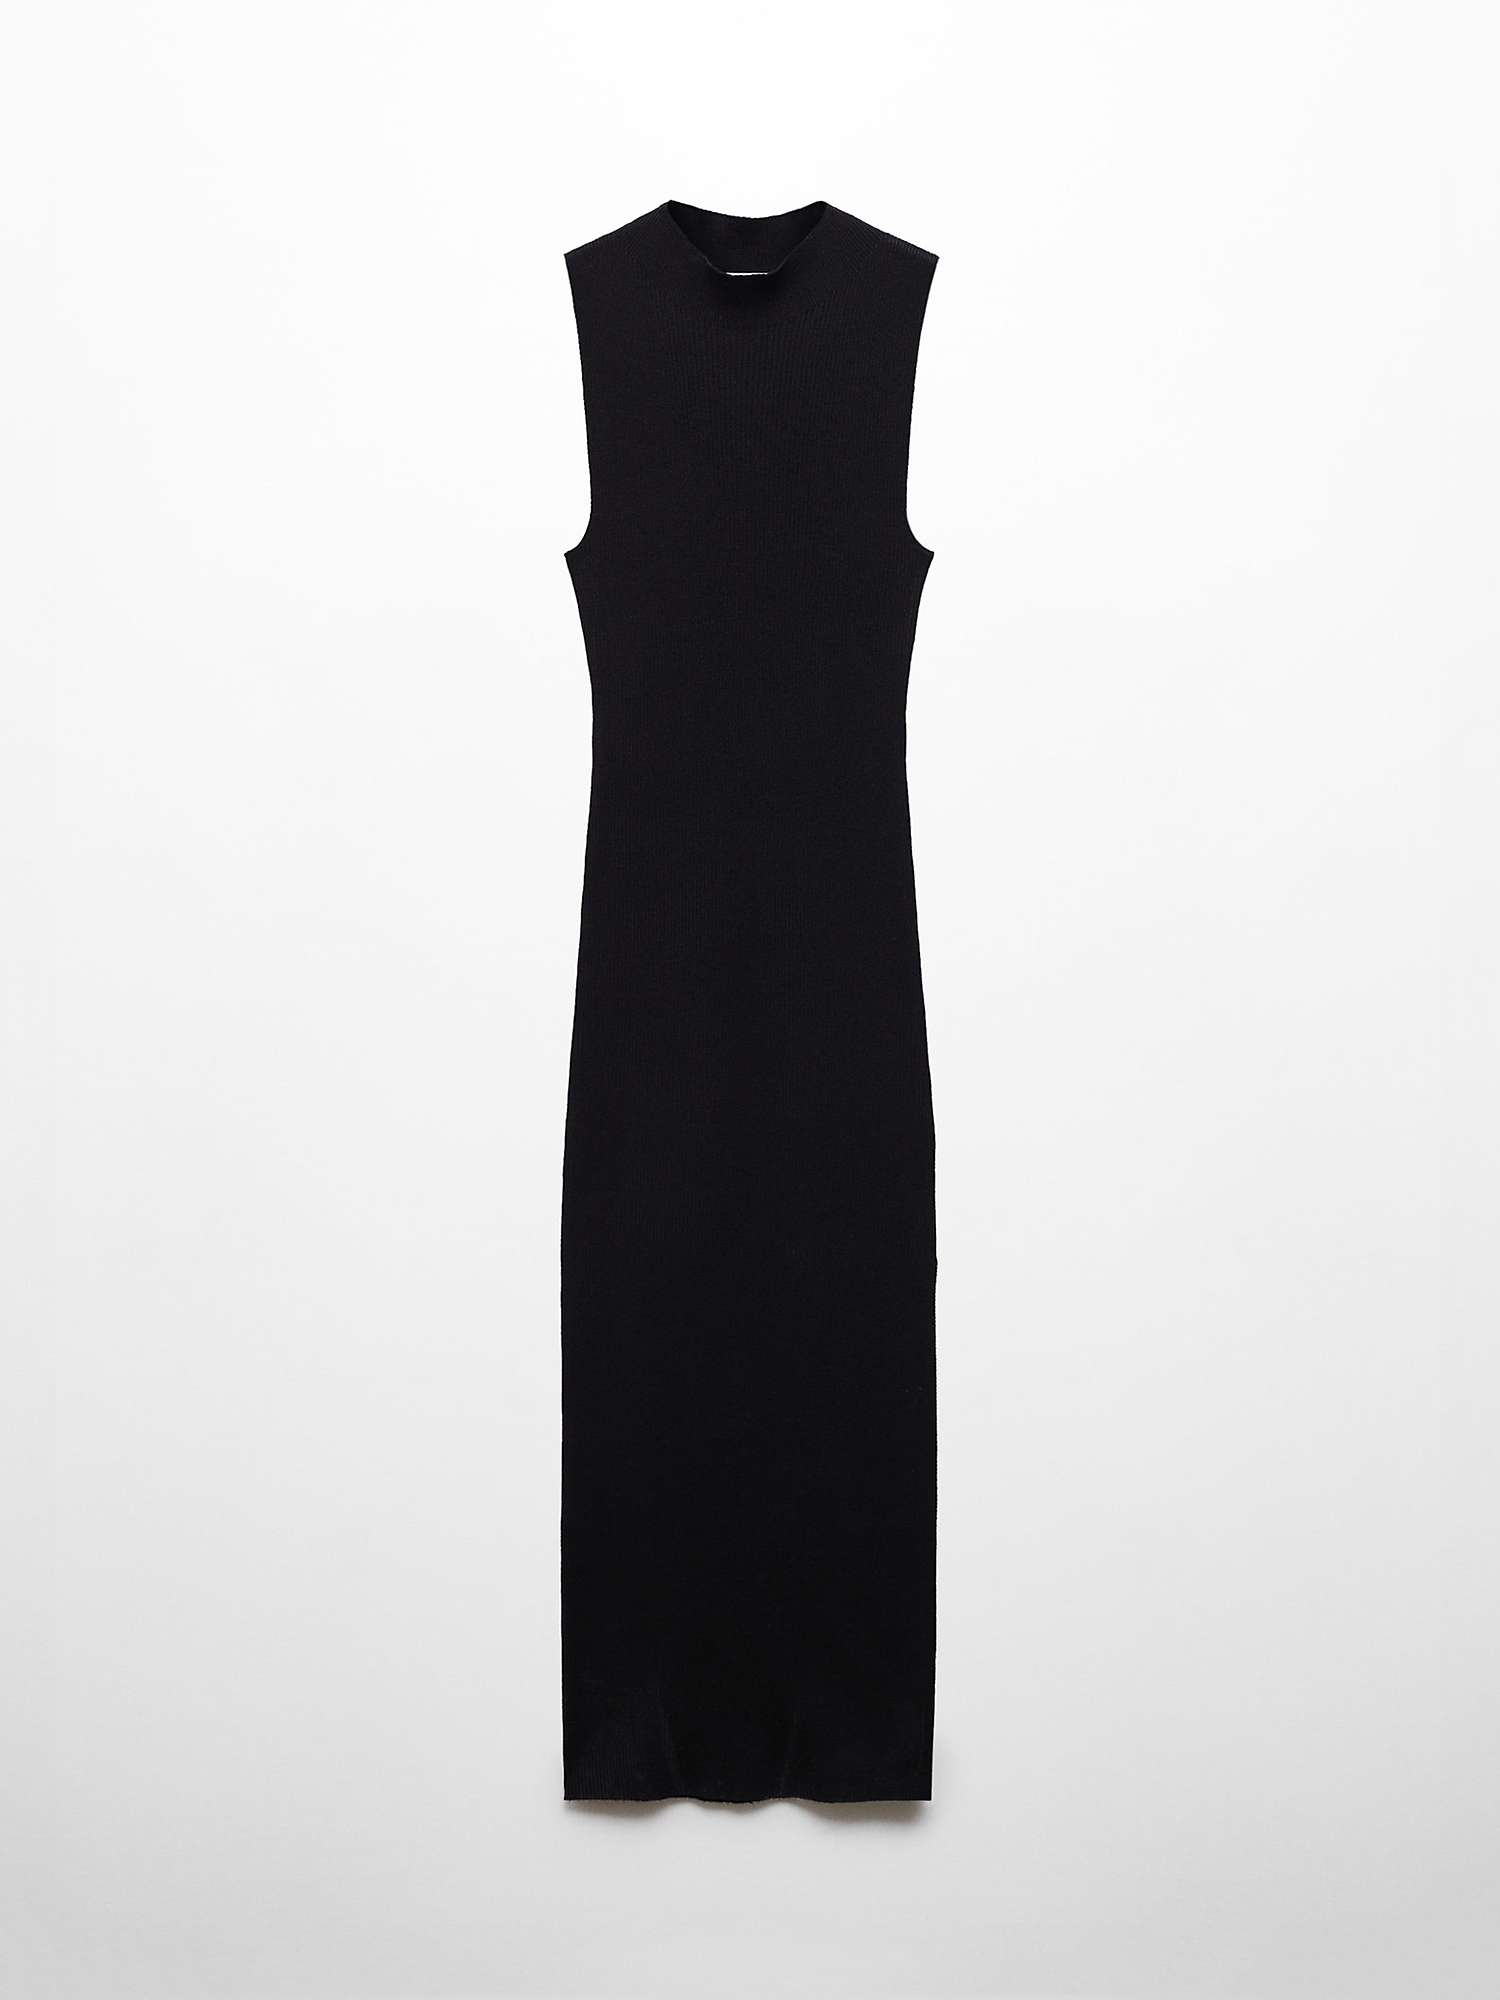 Buy Mango Perez Ribbed Knit Dress, Black Online at johnlewis.com